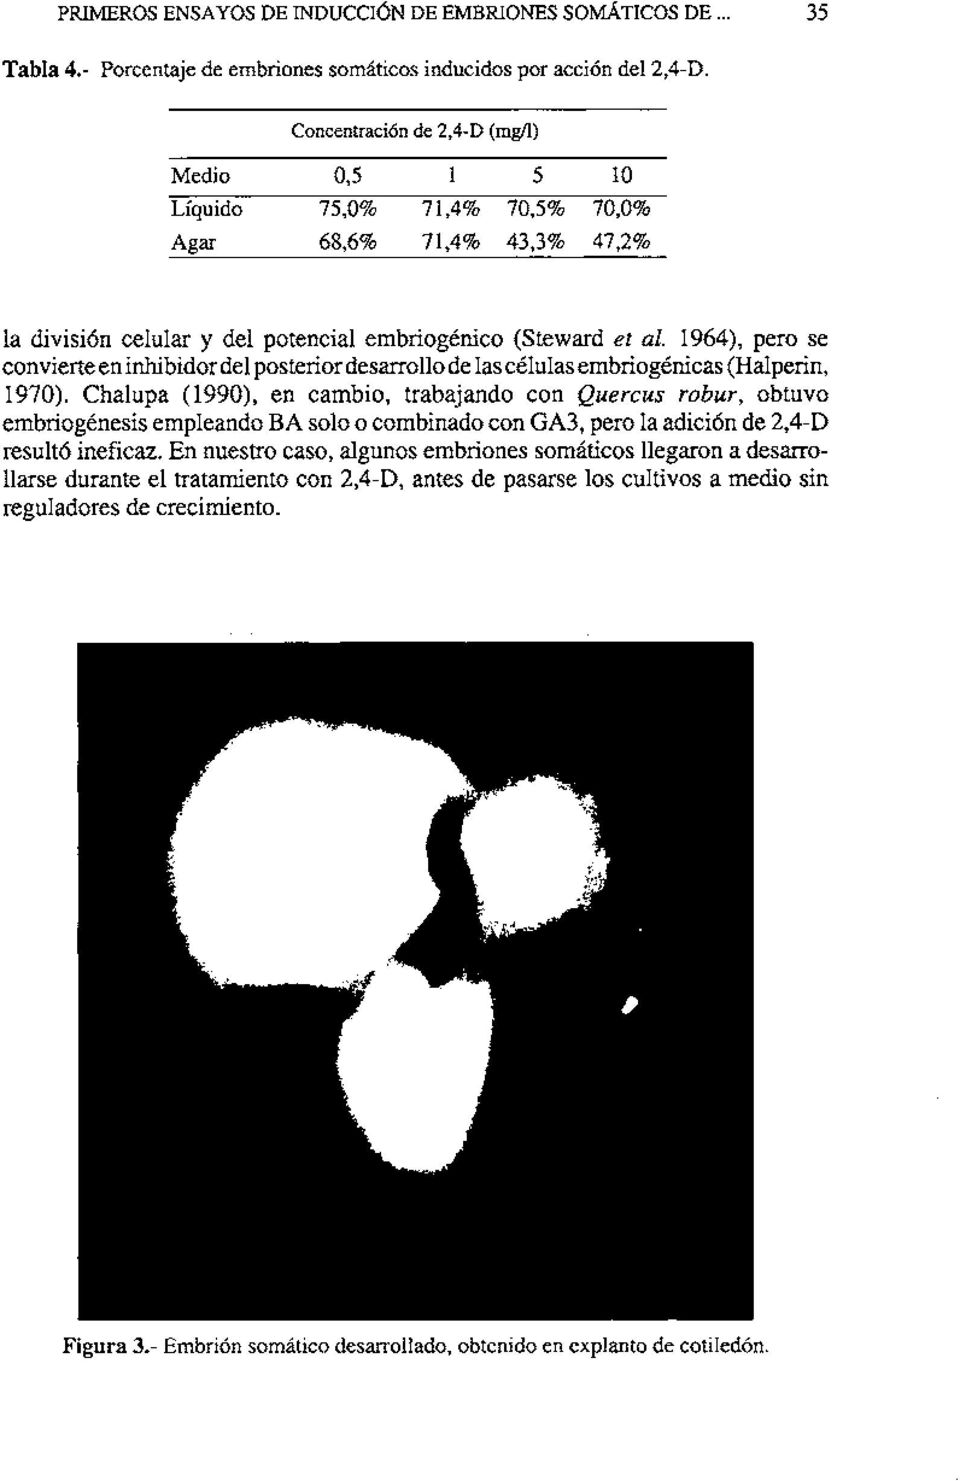 Chalupa (1990), en cambio, trabajando con Quercus robur, obtuvo embriogénesis empleando BA solo o combinado con GA3, pero la adición de 2,4-D resultó ineficaz.